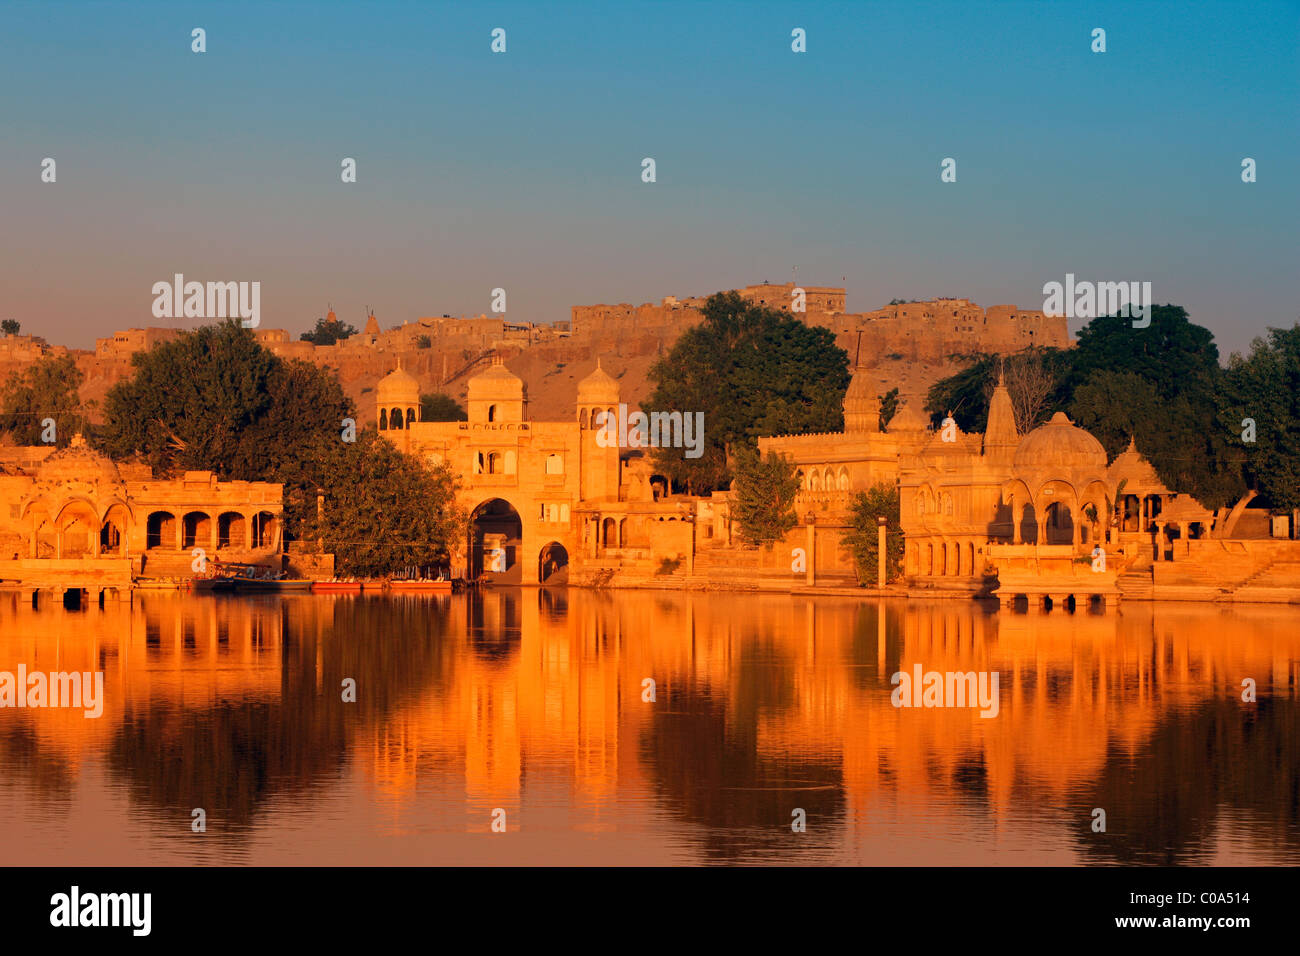 India, Rajasthan, Jaisalmer, Gadisar Lake in the early morning golden light Stock Photo